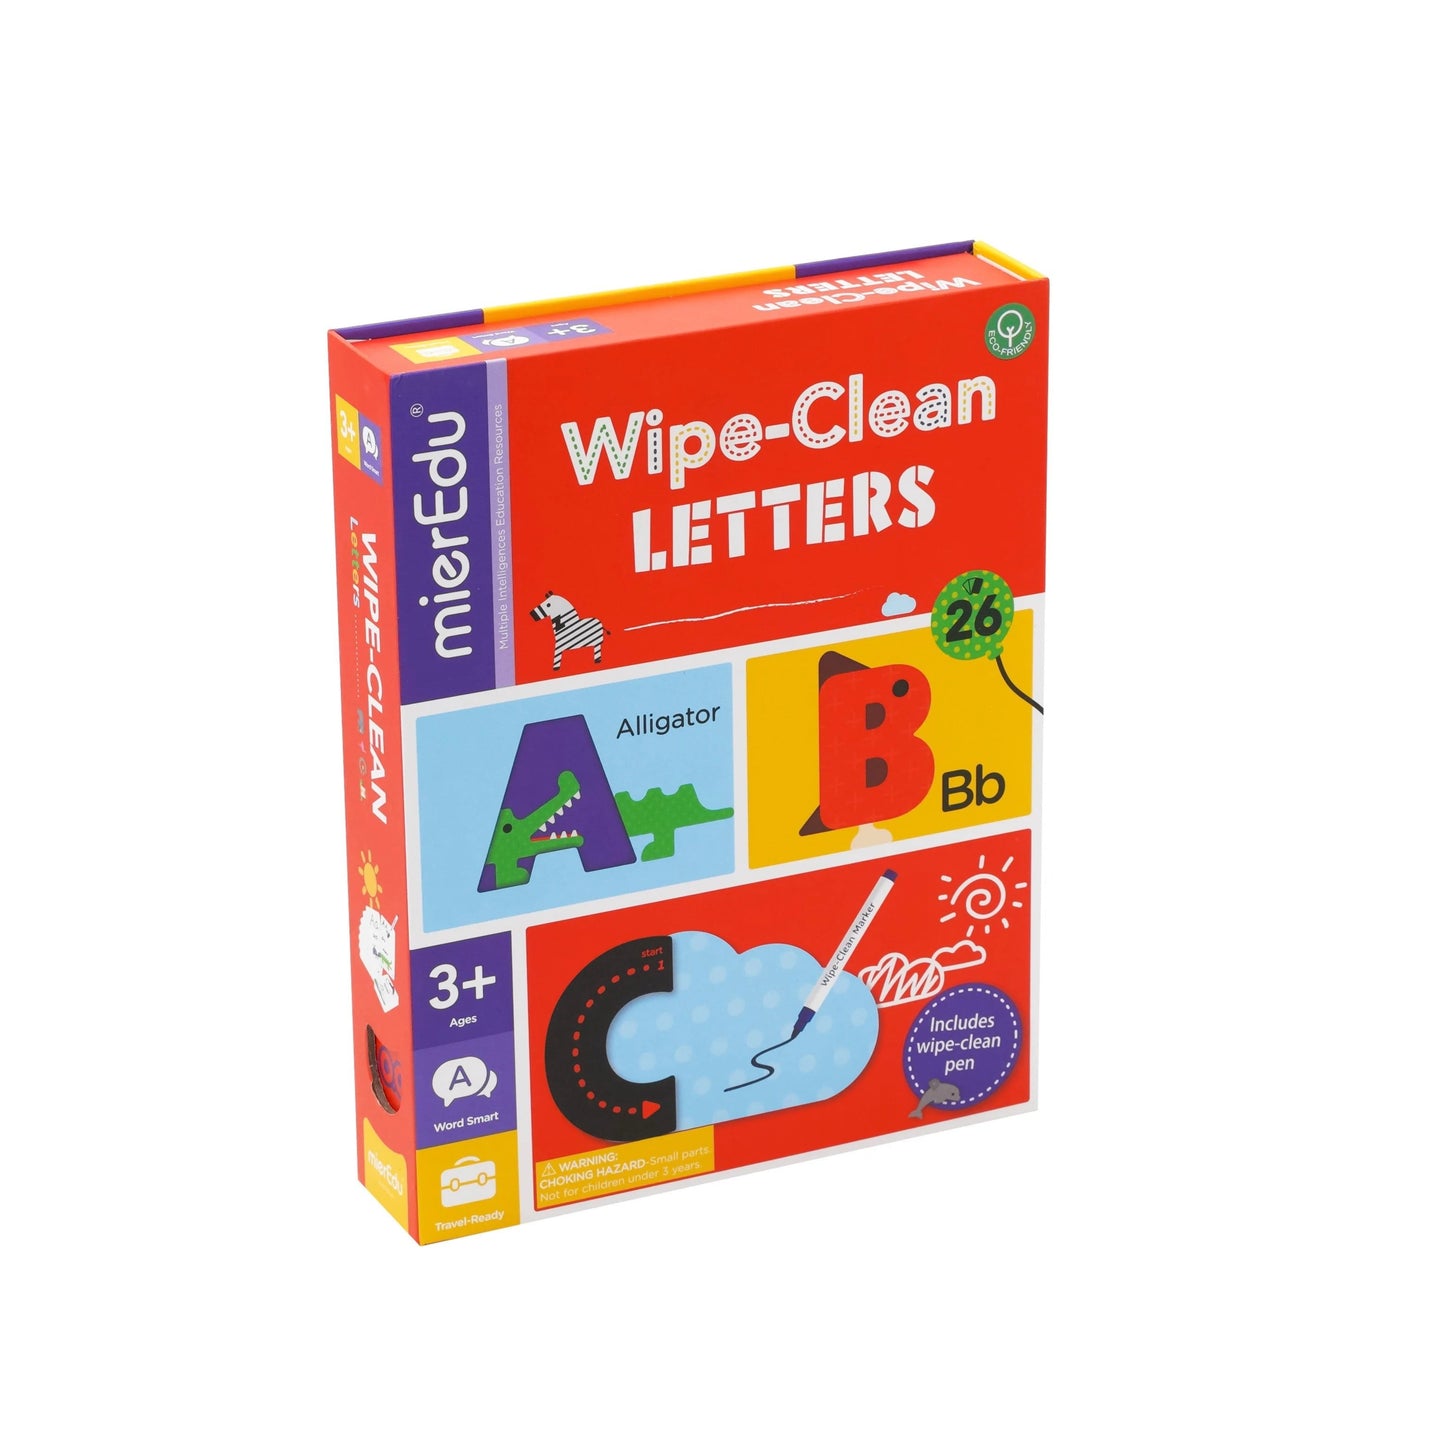 Wipe-Clean Activity Set / Letters